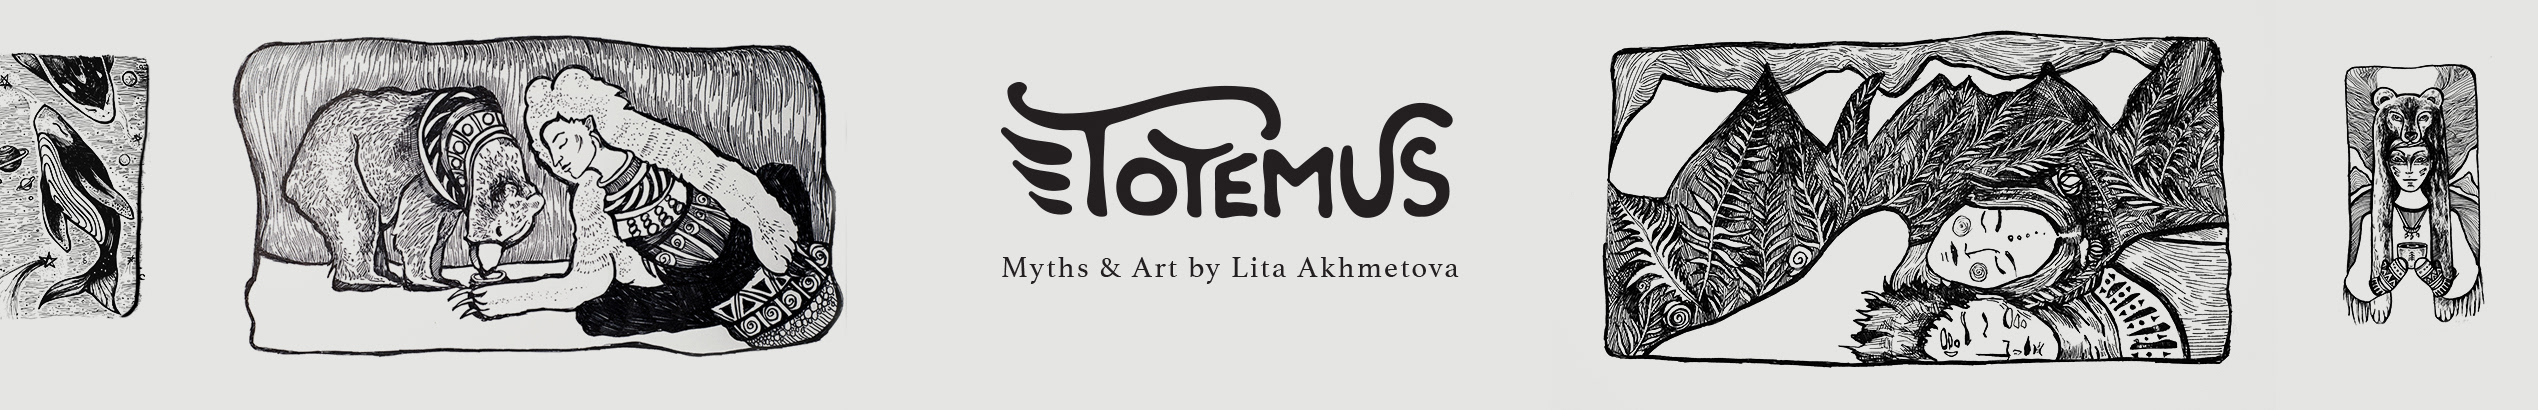 Banner de perfil de Lita Akhmetova